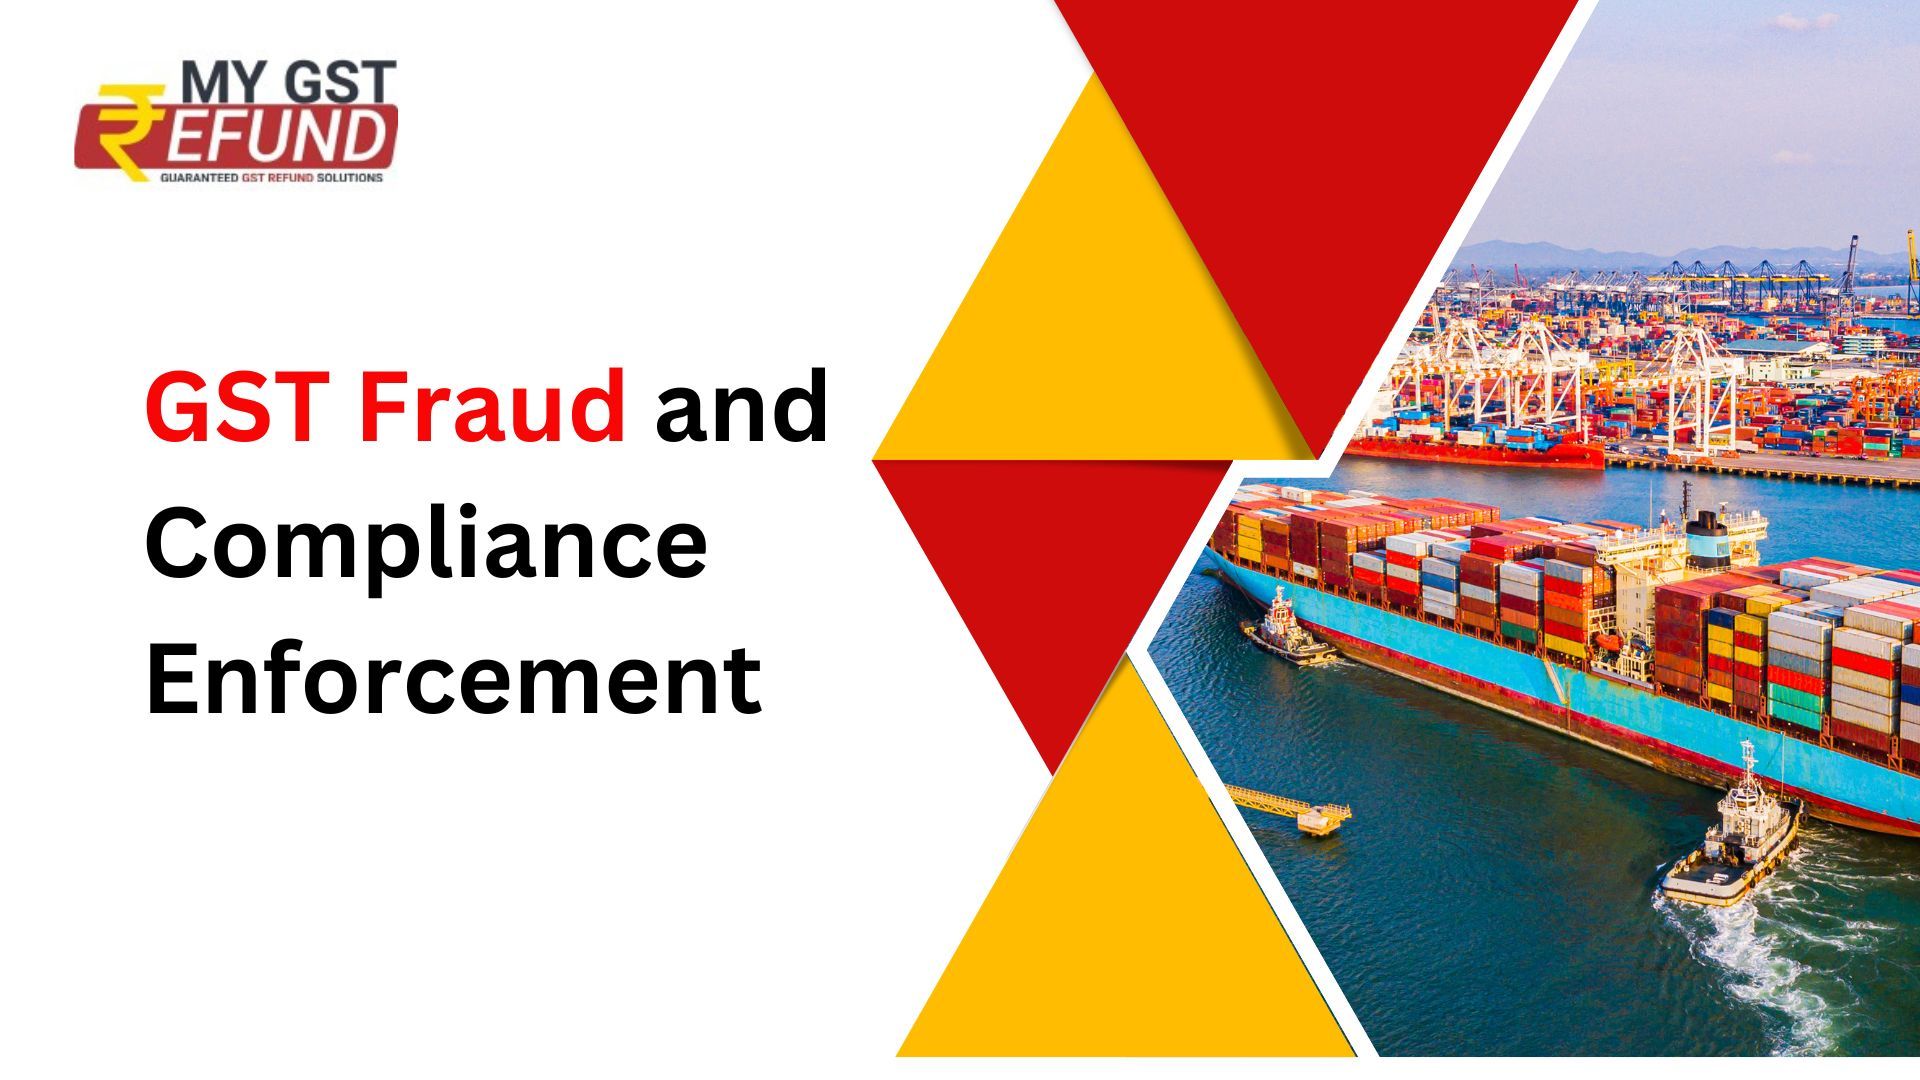 GST Fraud and Compliance Enforcement.jpg